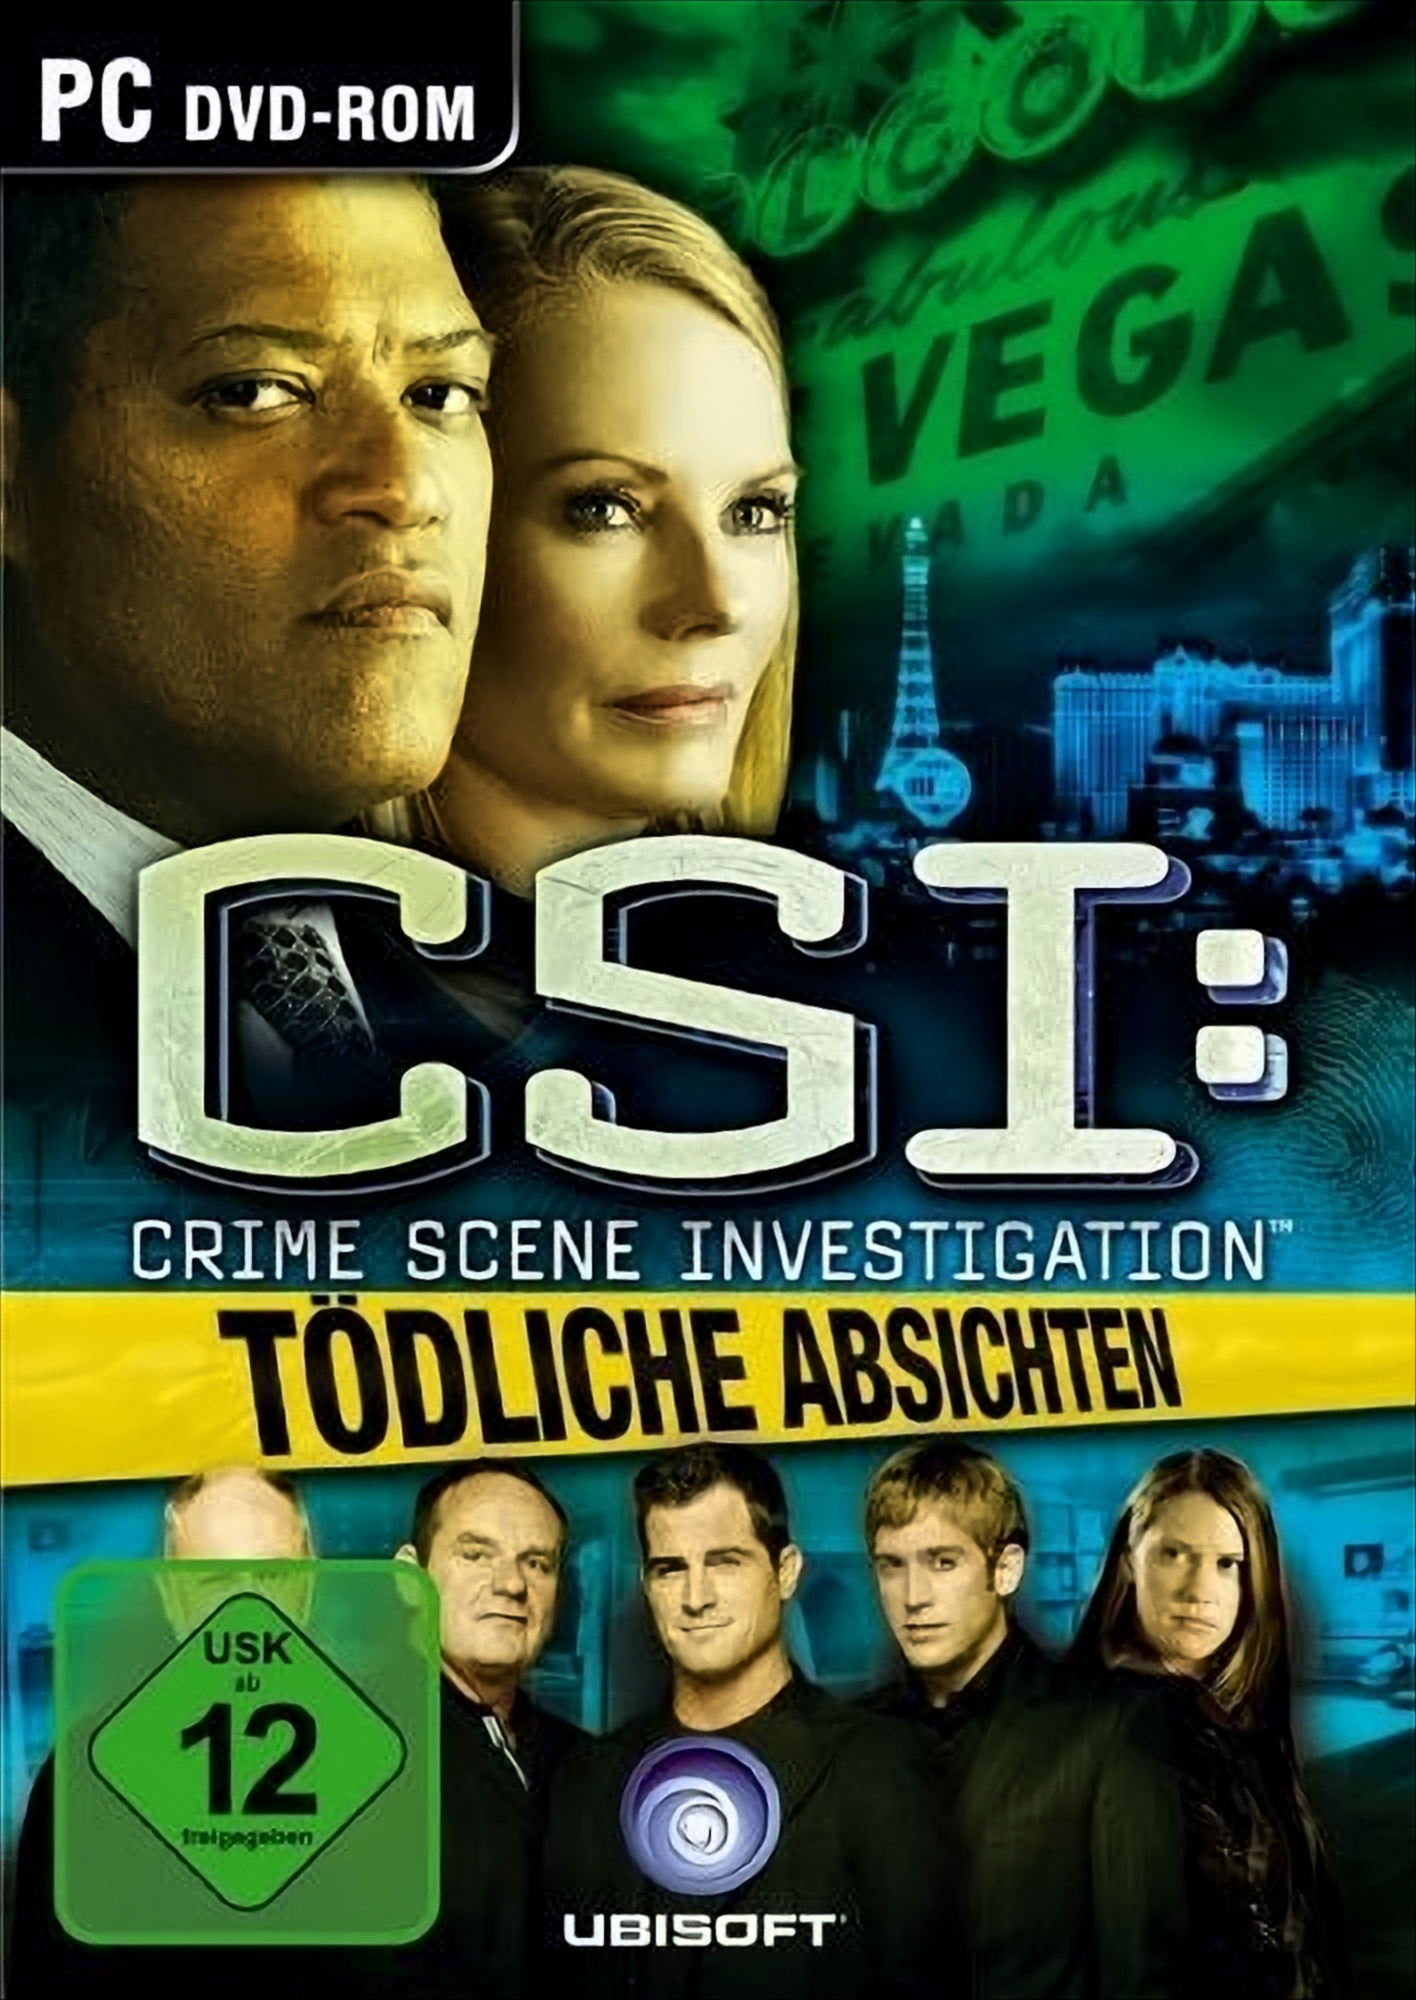 CSI Tödliche [PC] Scene Absichten Investigation: - - Crime